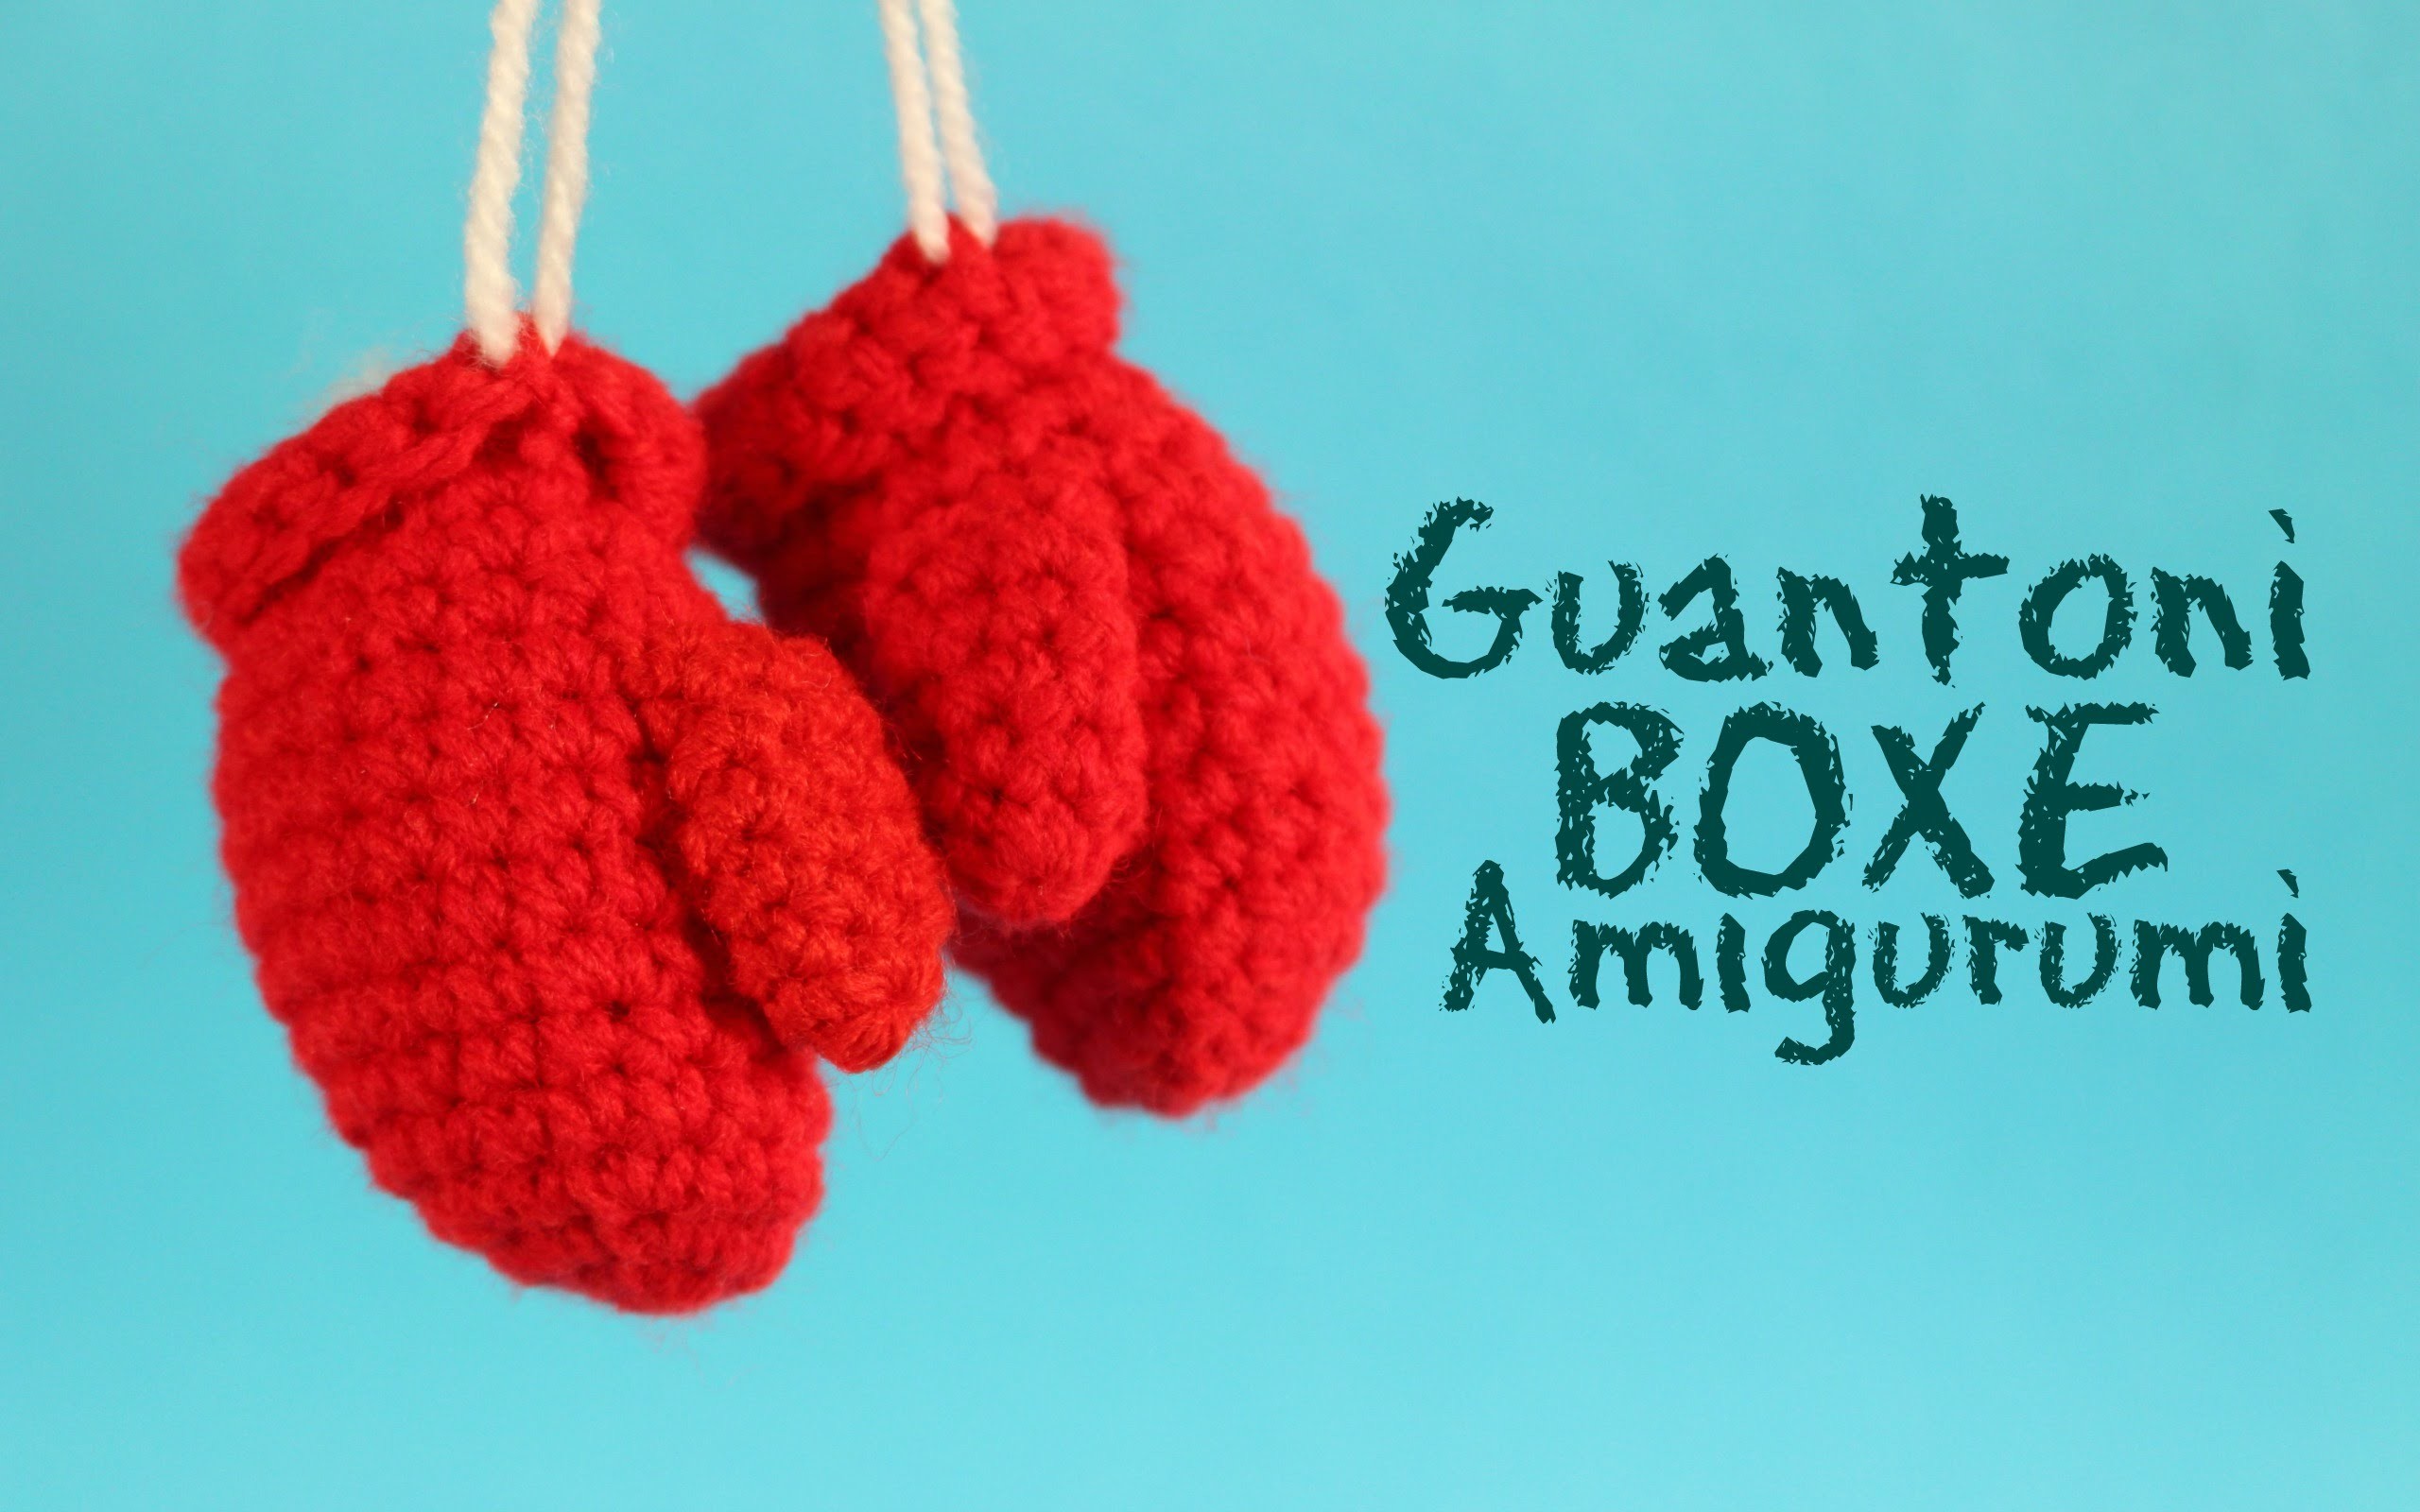 Mini Guantoni Boxe Amigurumi | World of amigurumi